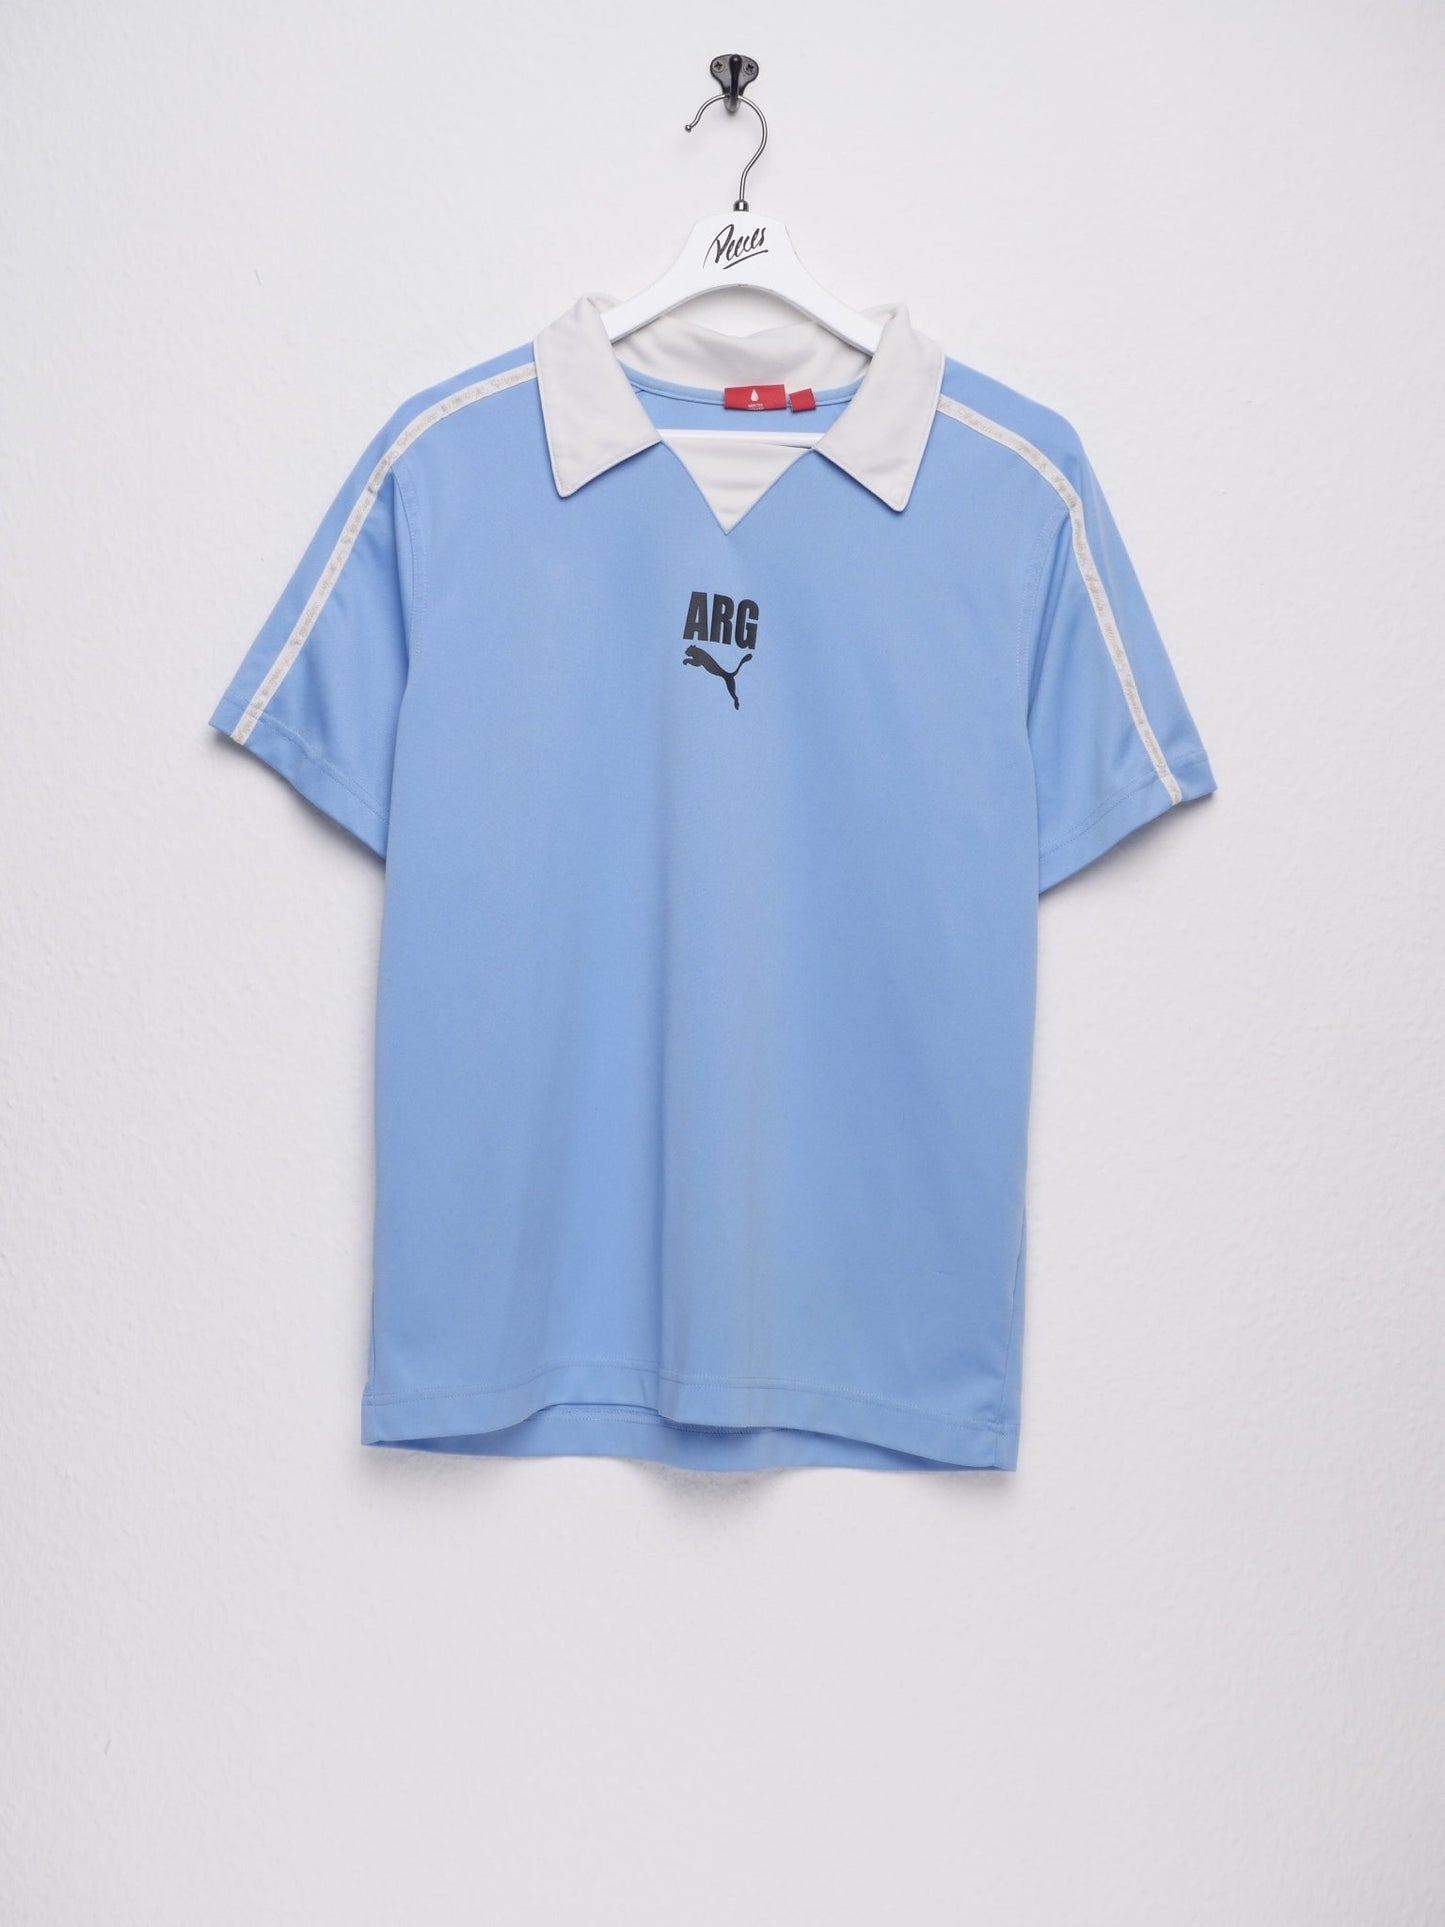 puma printed Argentina Logo light blue soccer jersey Shirt - Peeces